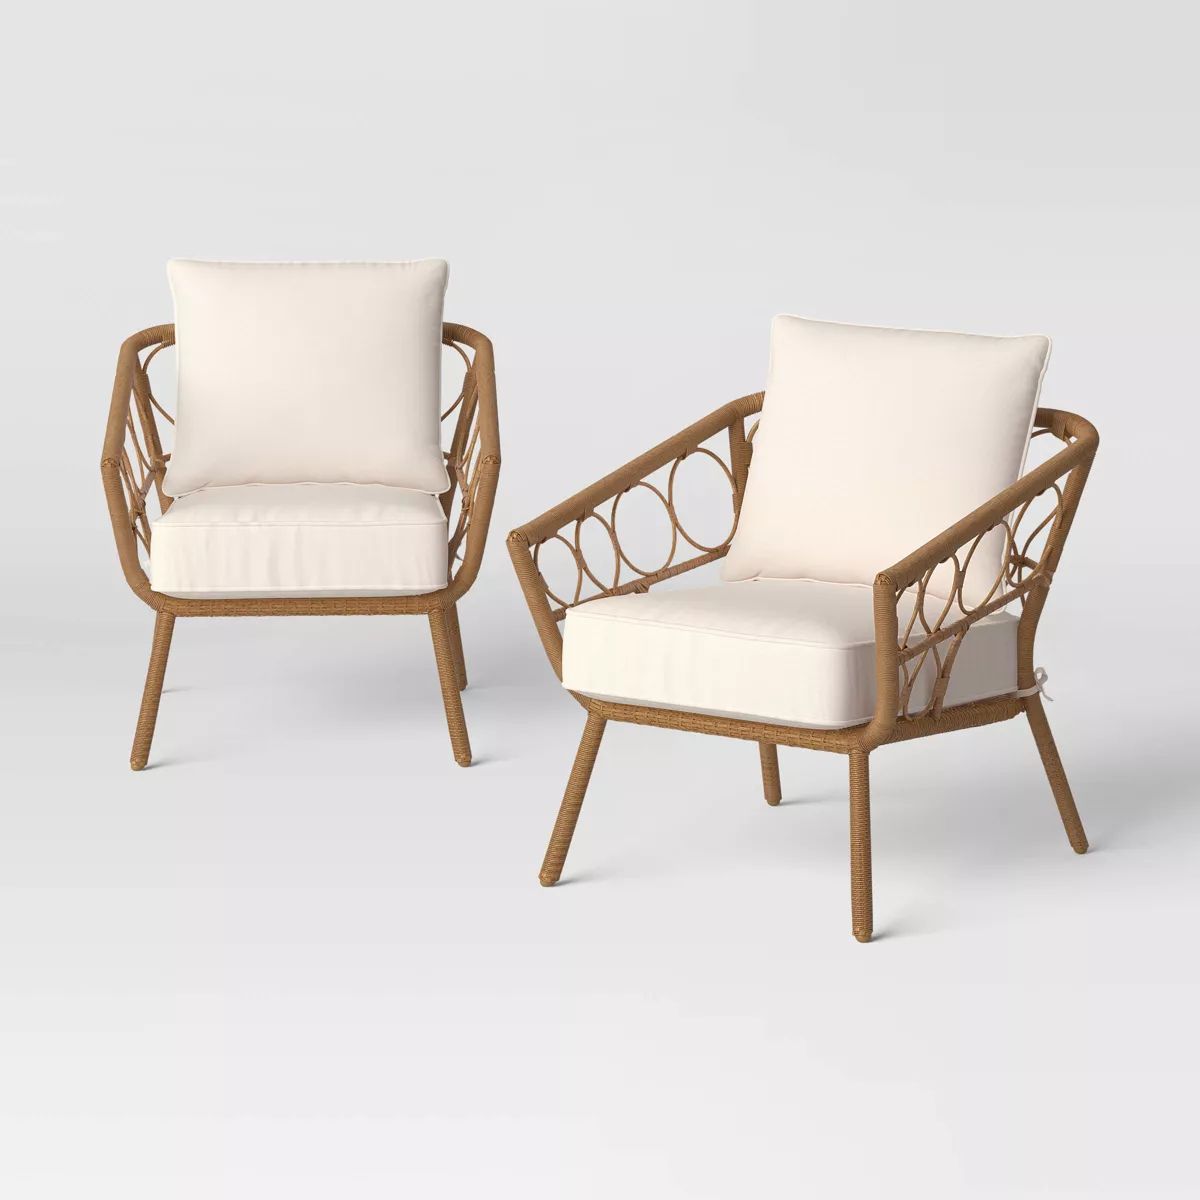 2pc Britanna Outdoor Patio Chairs, Club Chairs Natural - Threshold™ | Target